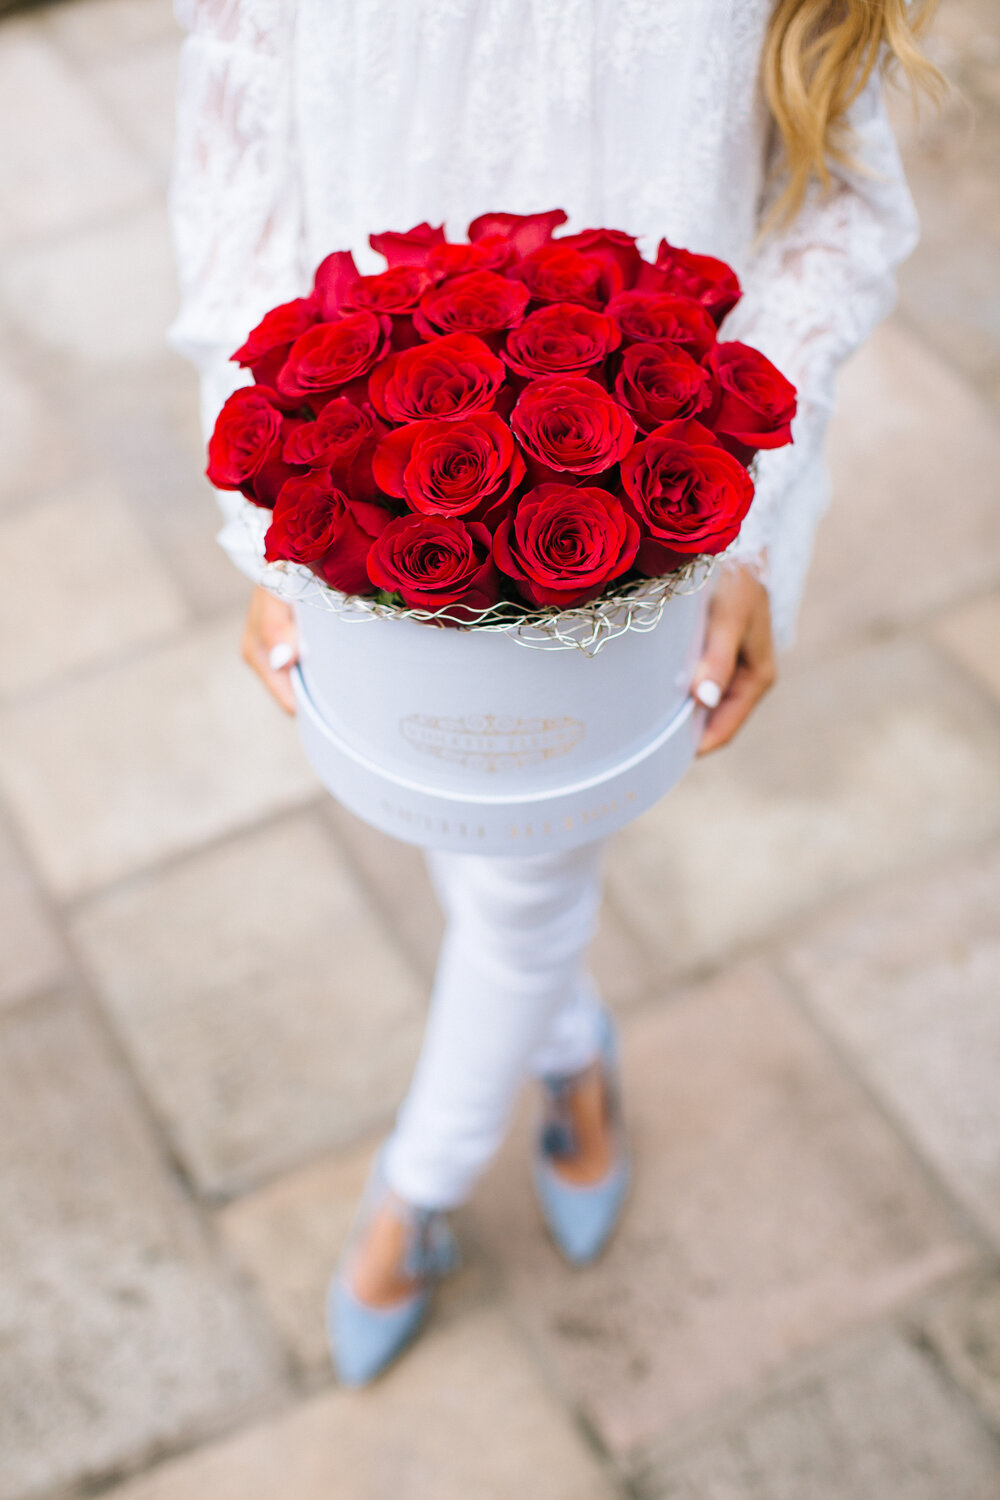 red-roses-designer-hatbox-roseville-sacramento-california-luxury-wedding-event-designer-hatbox-gift-violette-fleurs-anna-perevertaylo.jpg